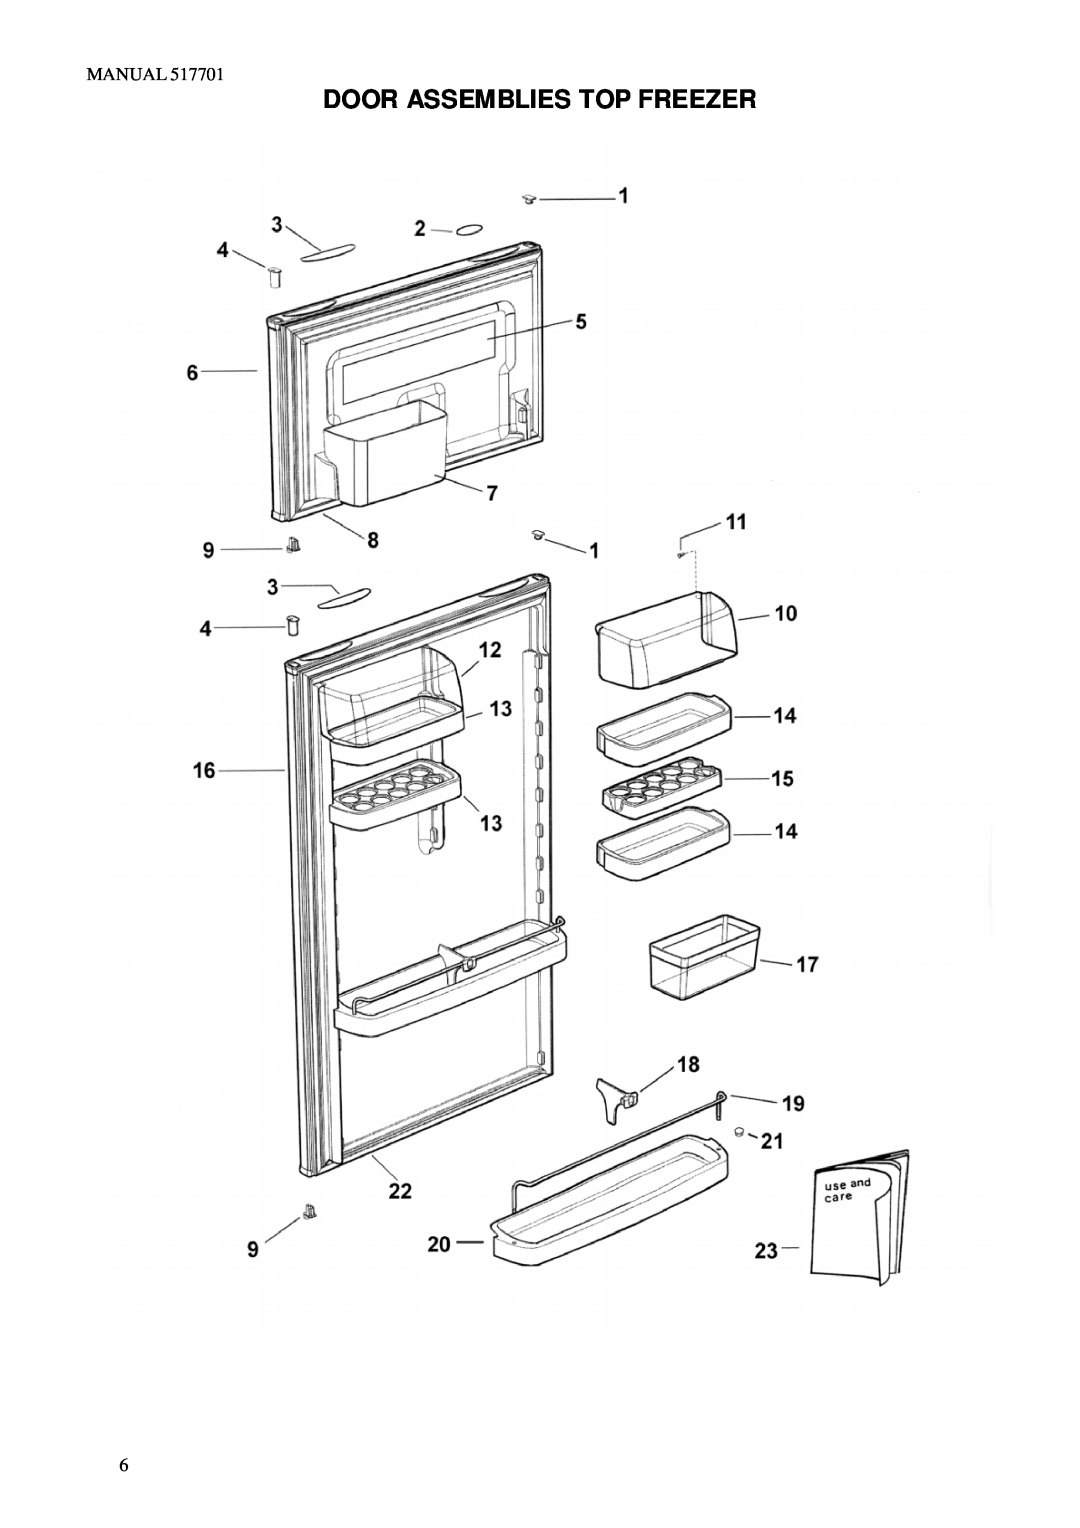 LG Electronics E442B, E16B, E440T, E16T manual Door Assemblies Top Freezer, Manual 